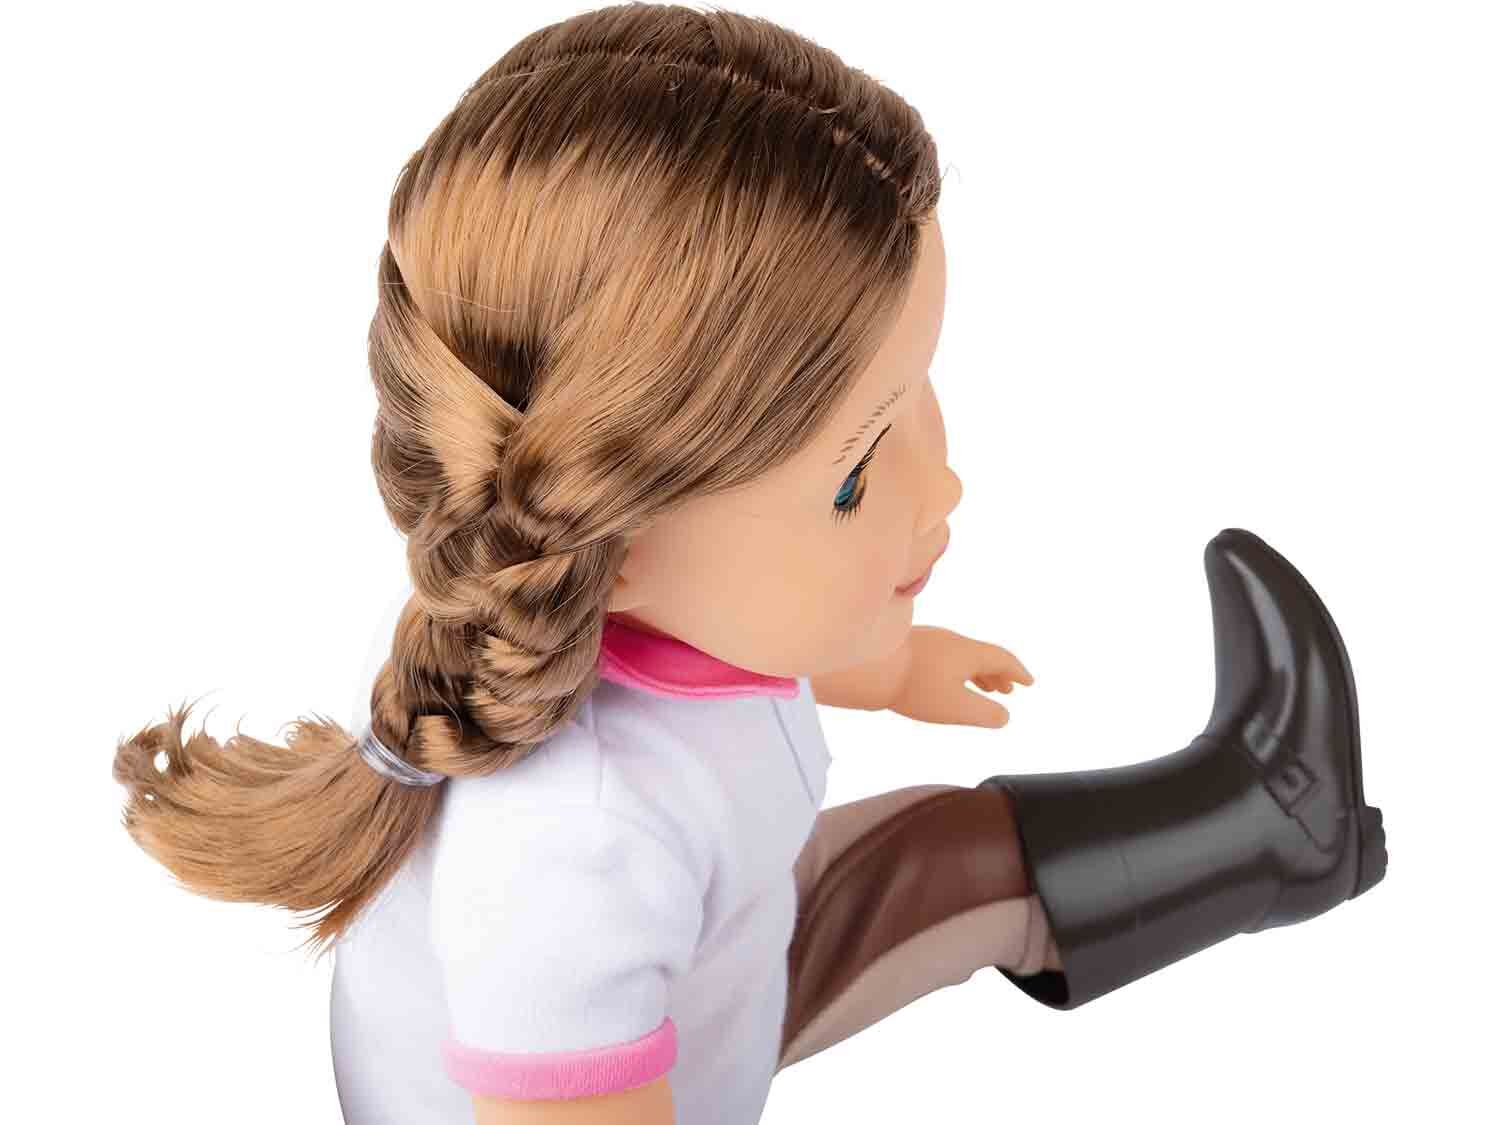 Muñeca con pelo castaño